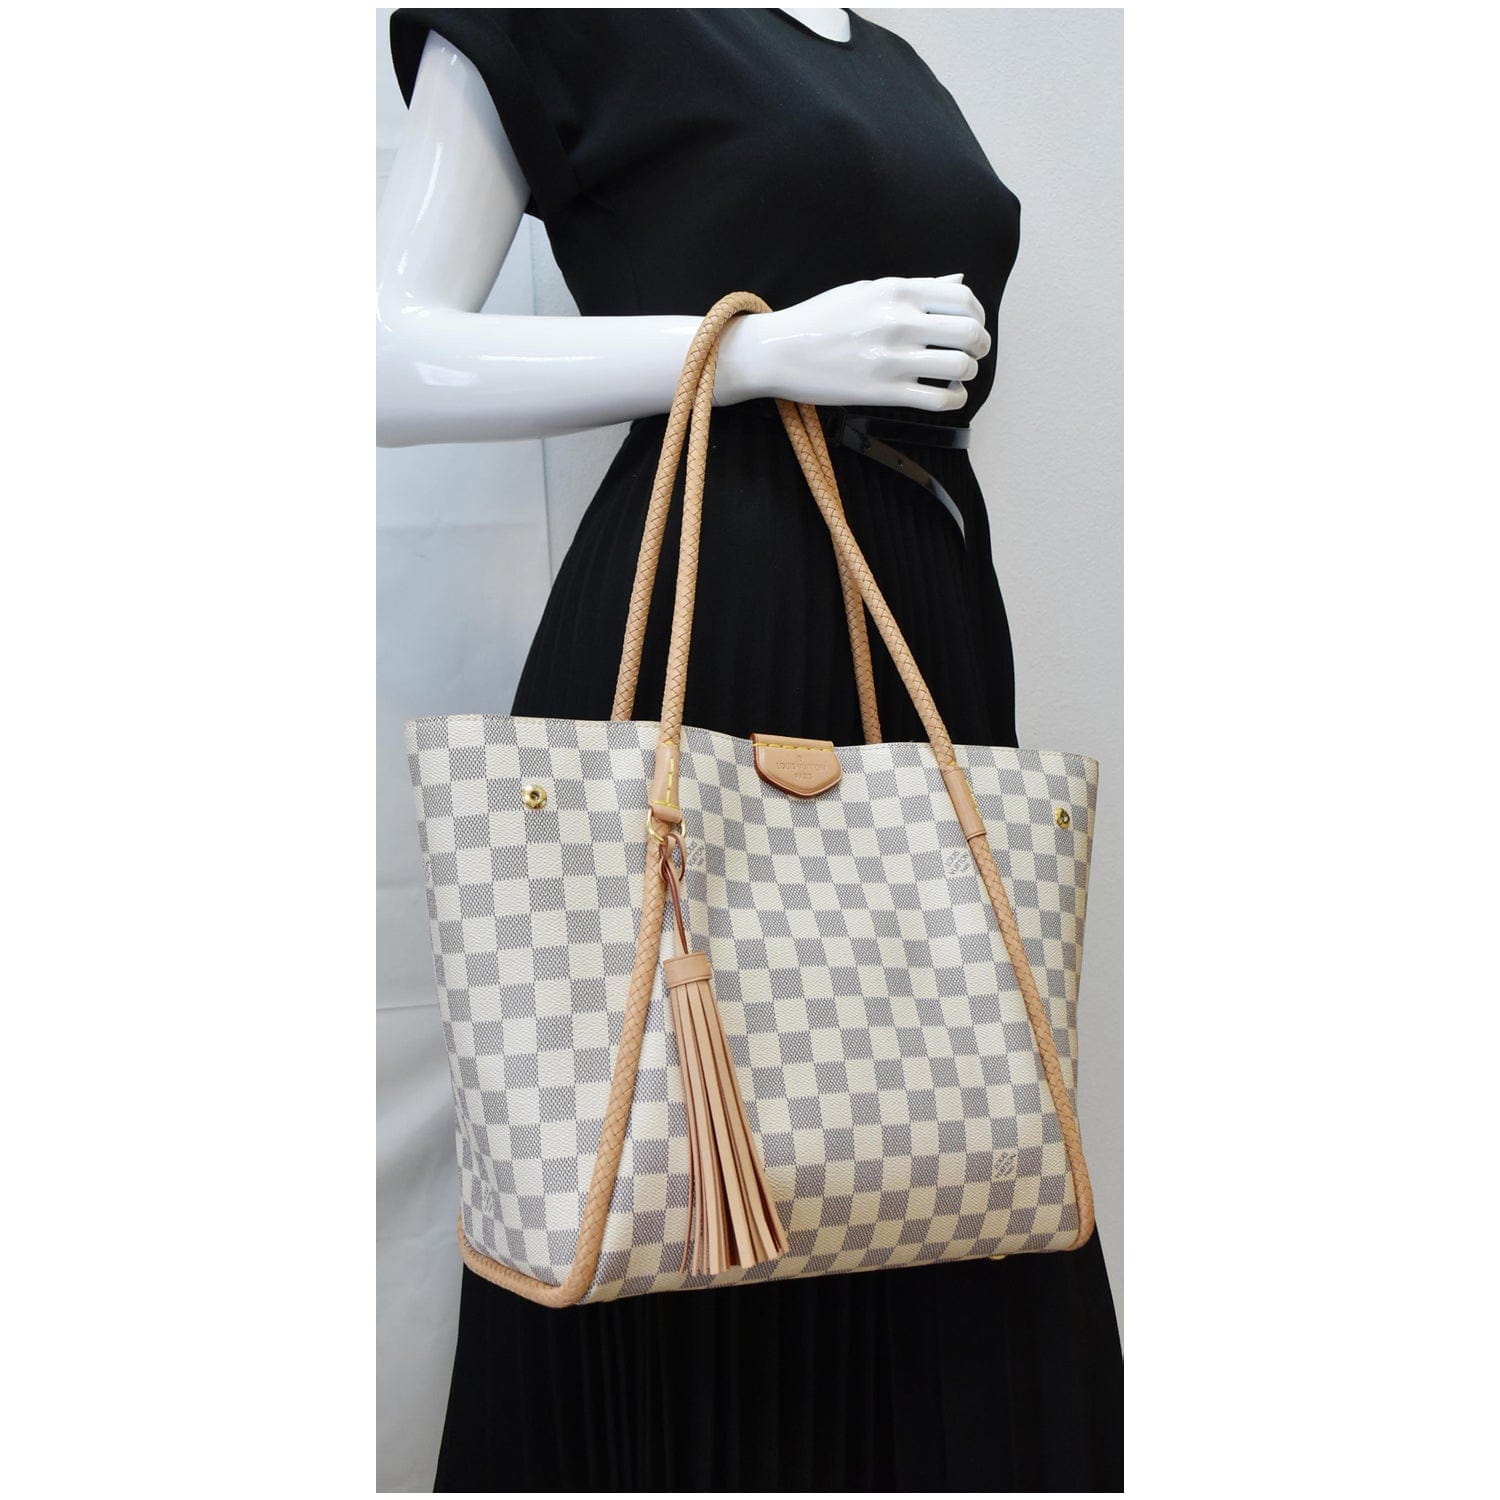 Louis Vuitton's Handbag Propriano D Azur